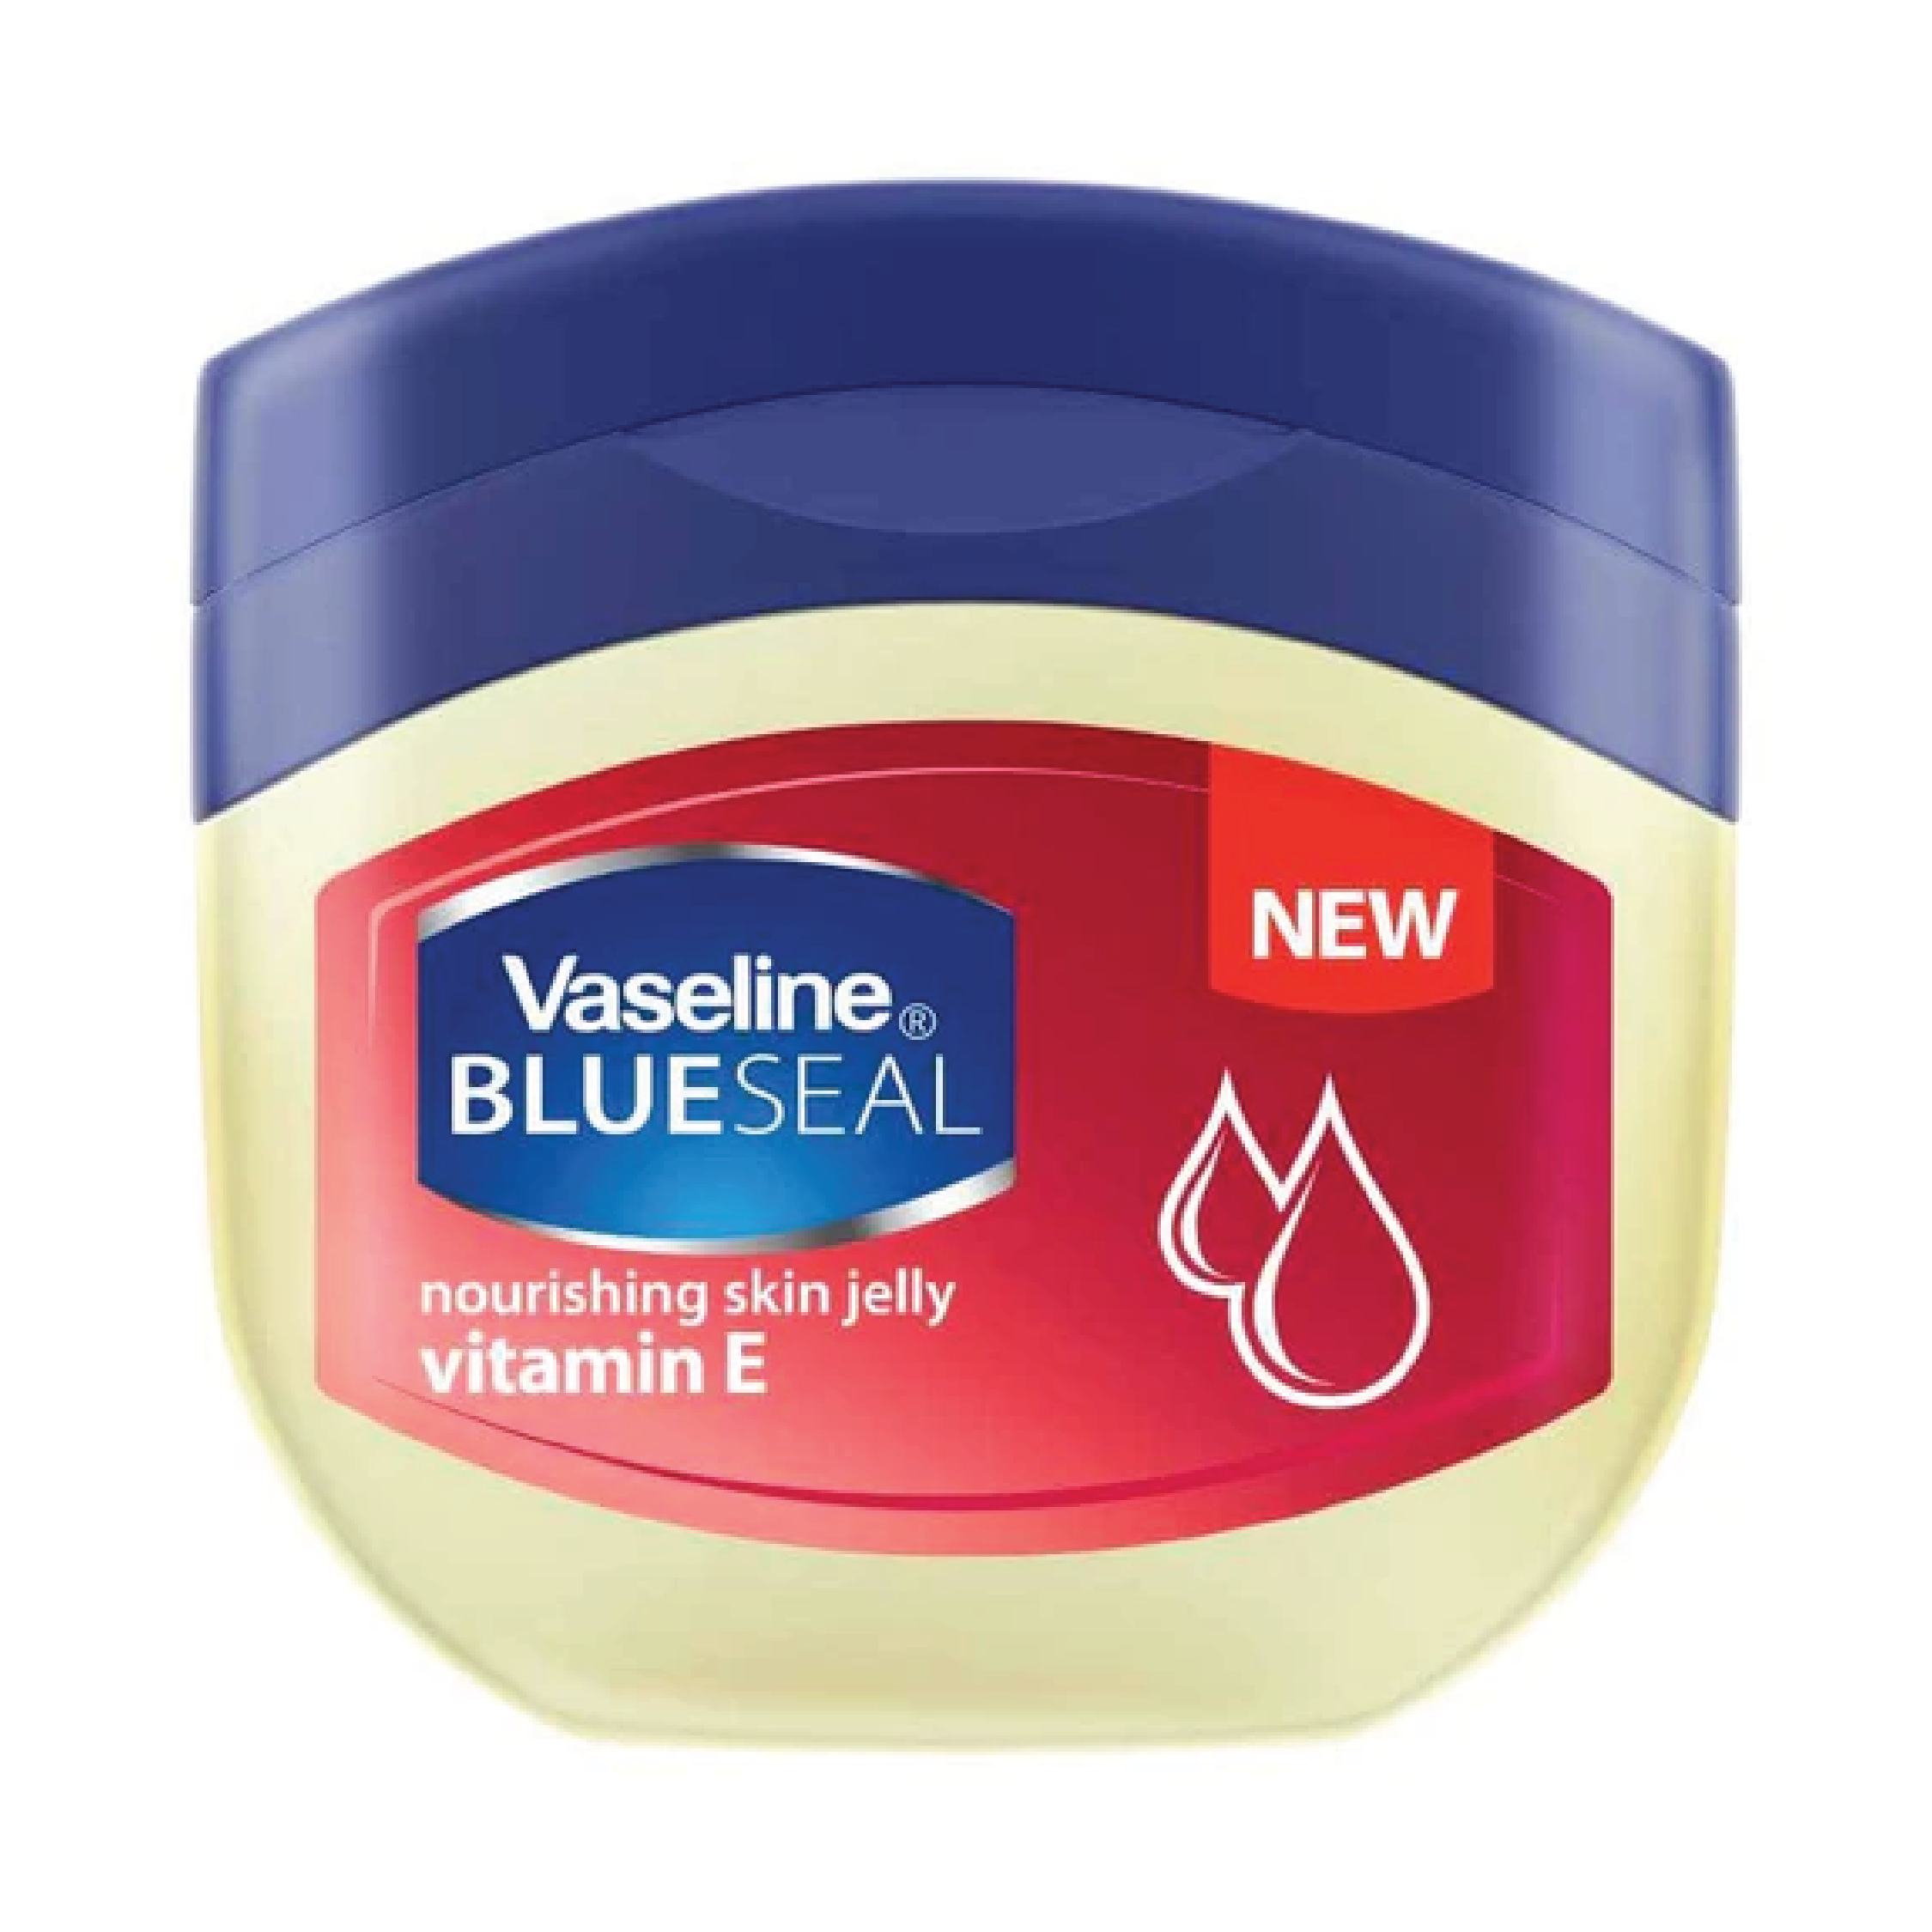 Vaseline Blueseal Vitamin E Nourishing Skin Jelly